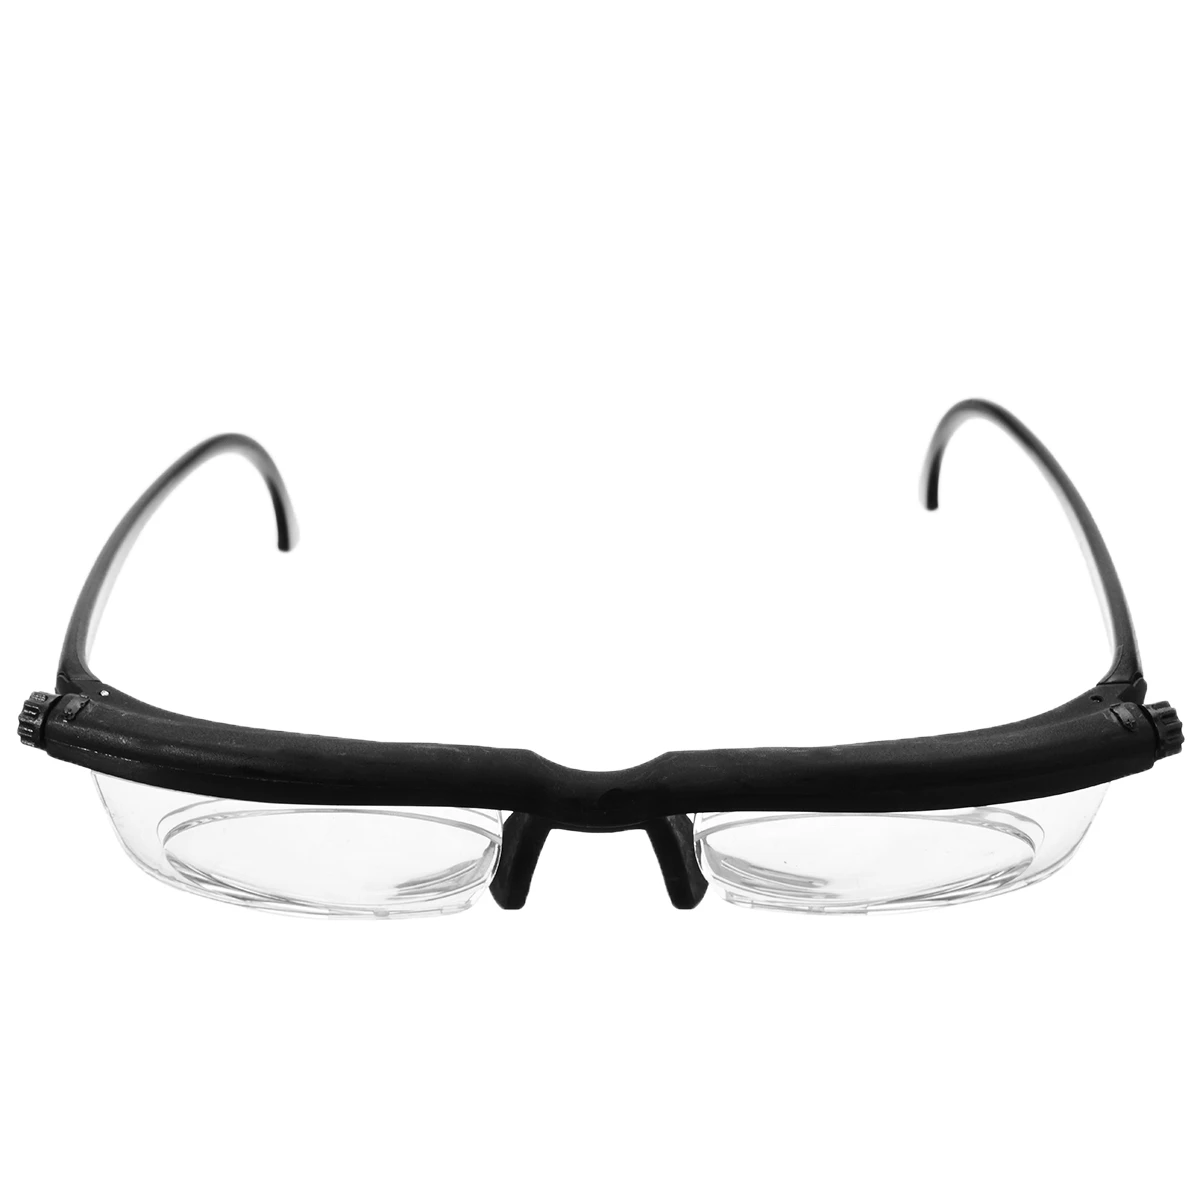 

New Adjustable Strength Lens Eyewear Variable Vision Zoom Glasses H0027, Black frame